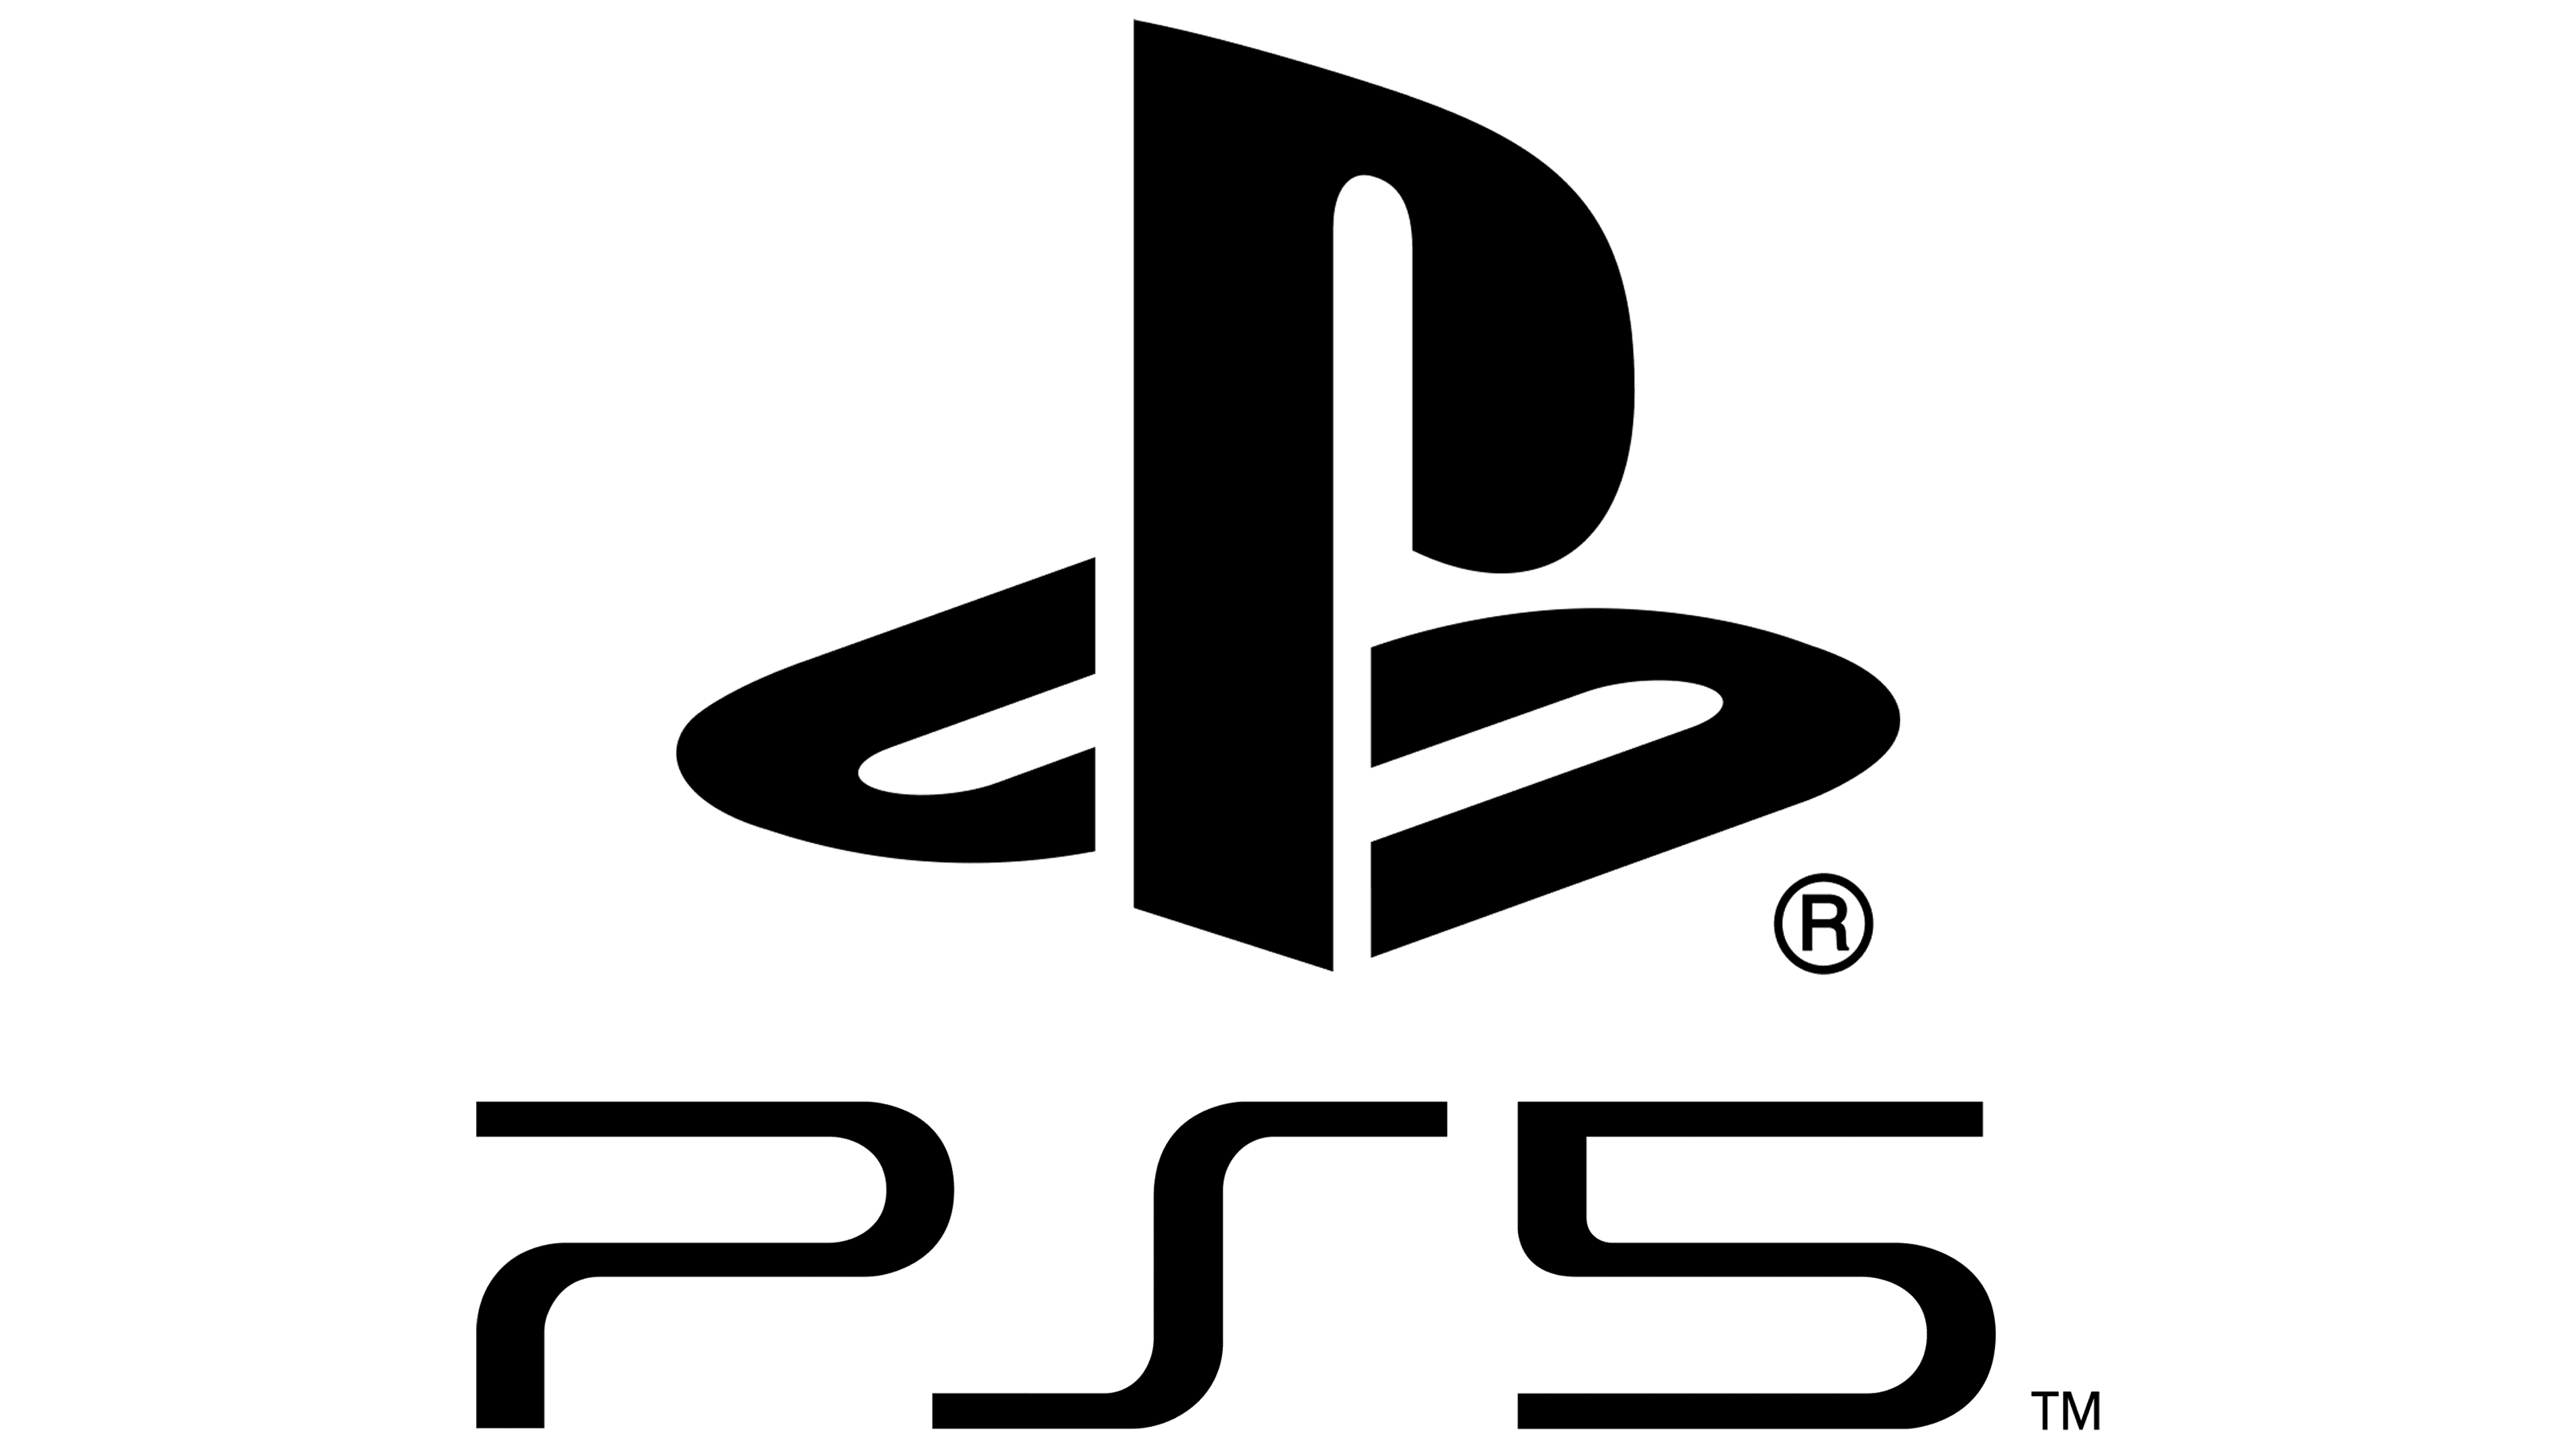 Логотип пс. Плейстейшен 4 logo. Sony PLAYSTATION логотип вектор. Ps4 PLAYSTATION значки. Sony PLAYSTATION 5 logo PNG.